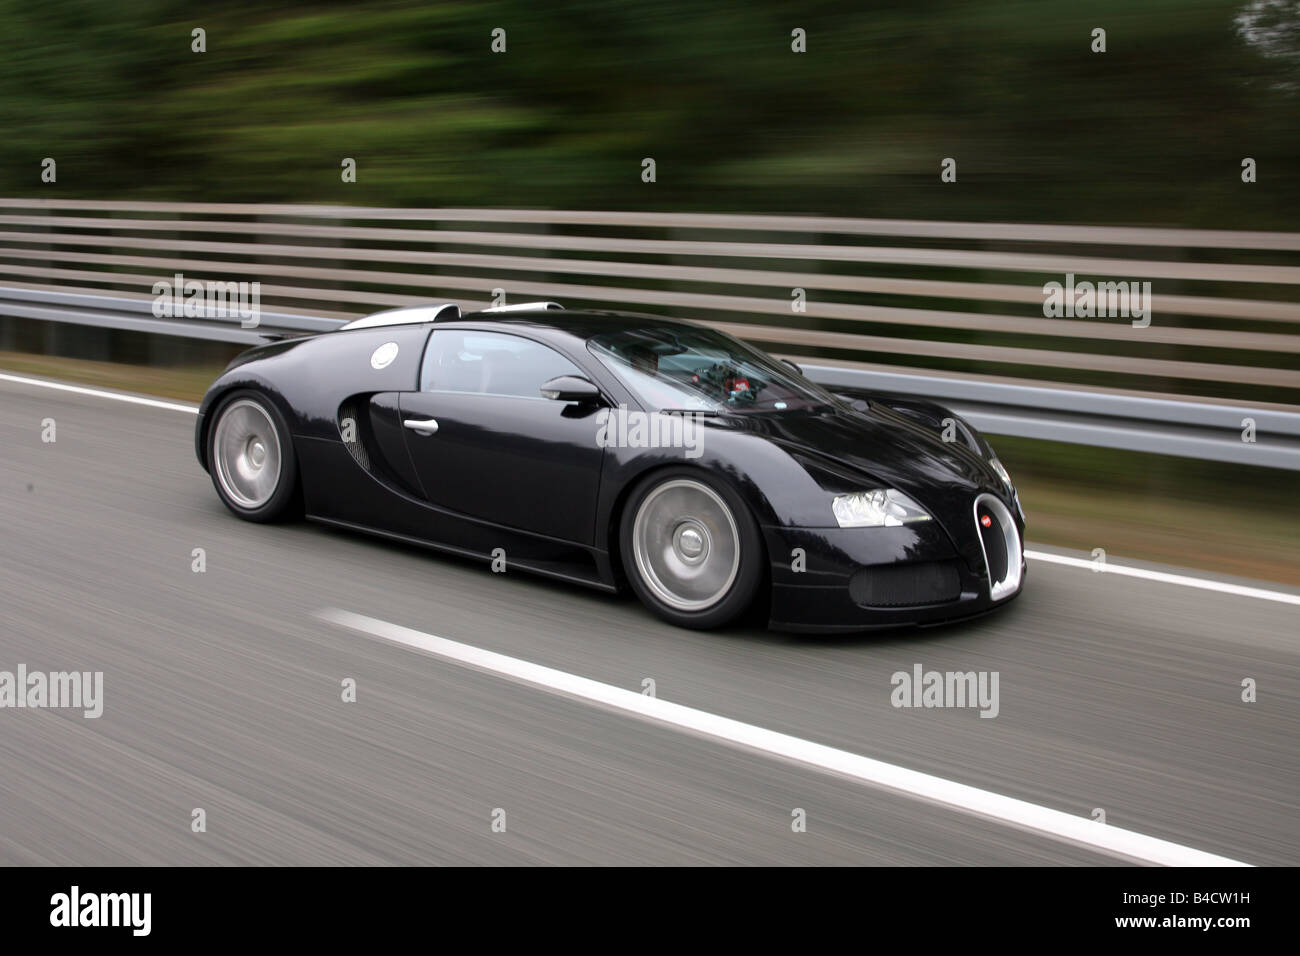 Black bugatti veyron hi-res stock photography and images - Alamy